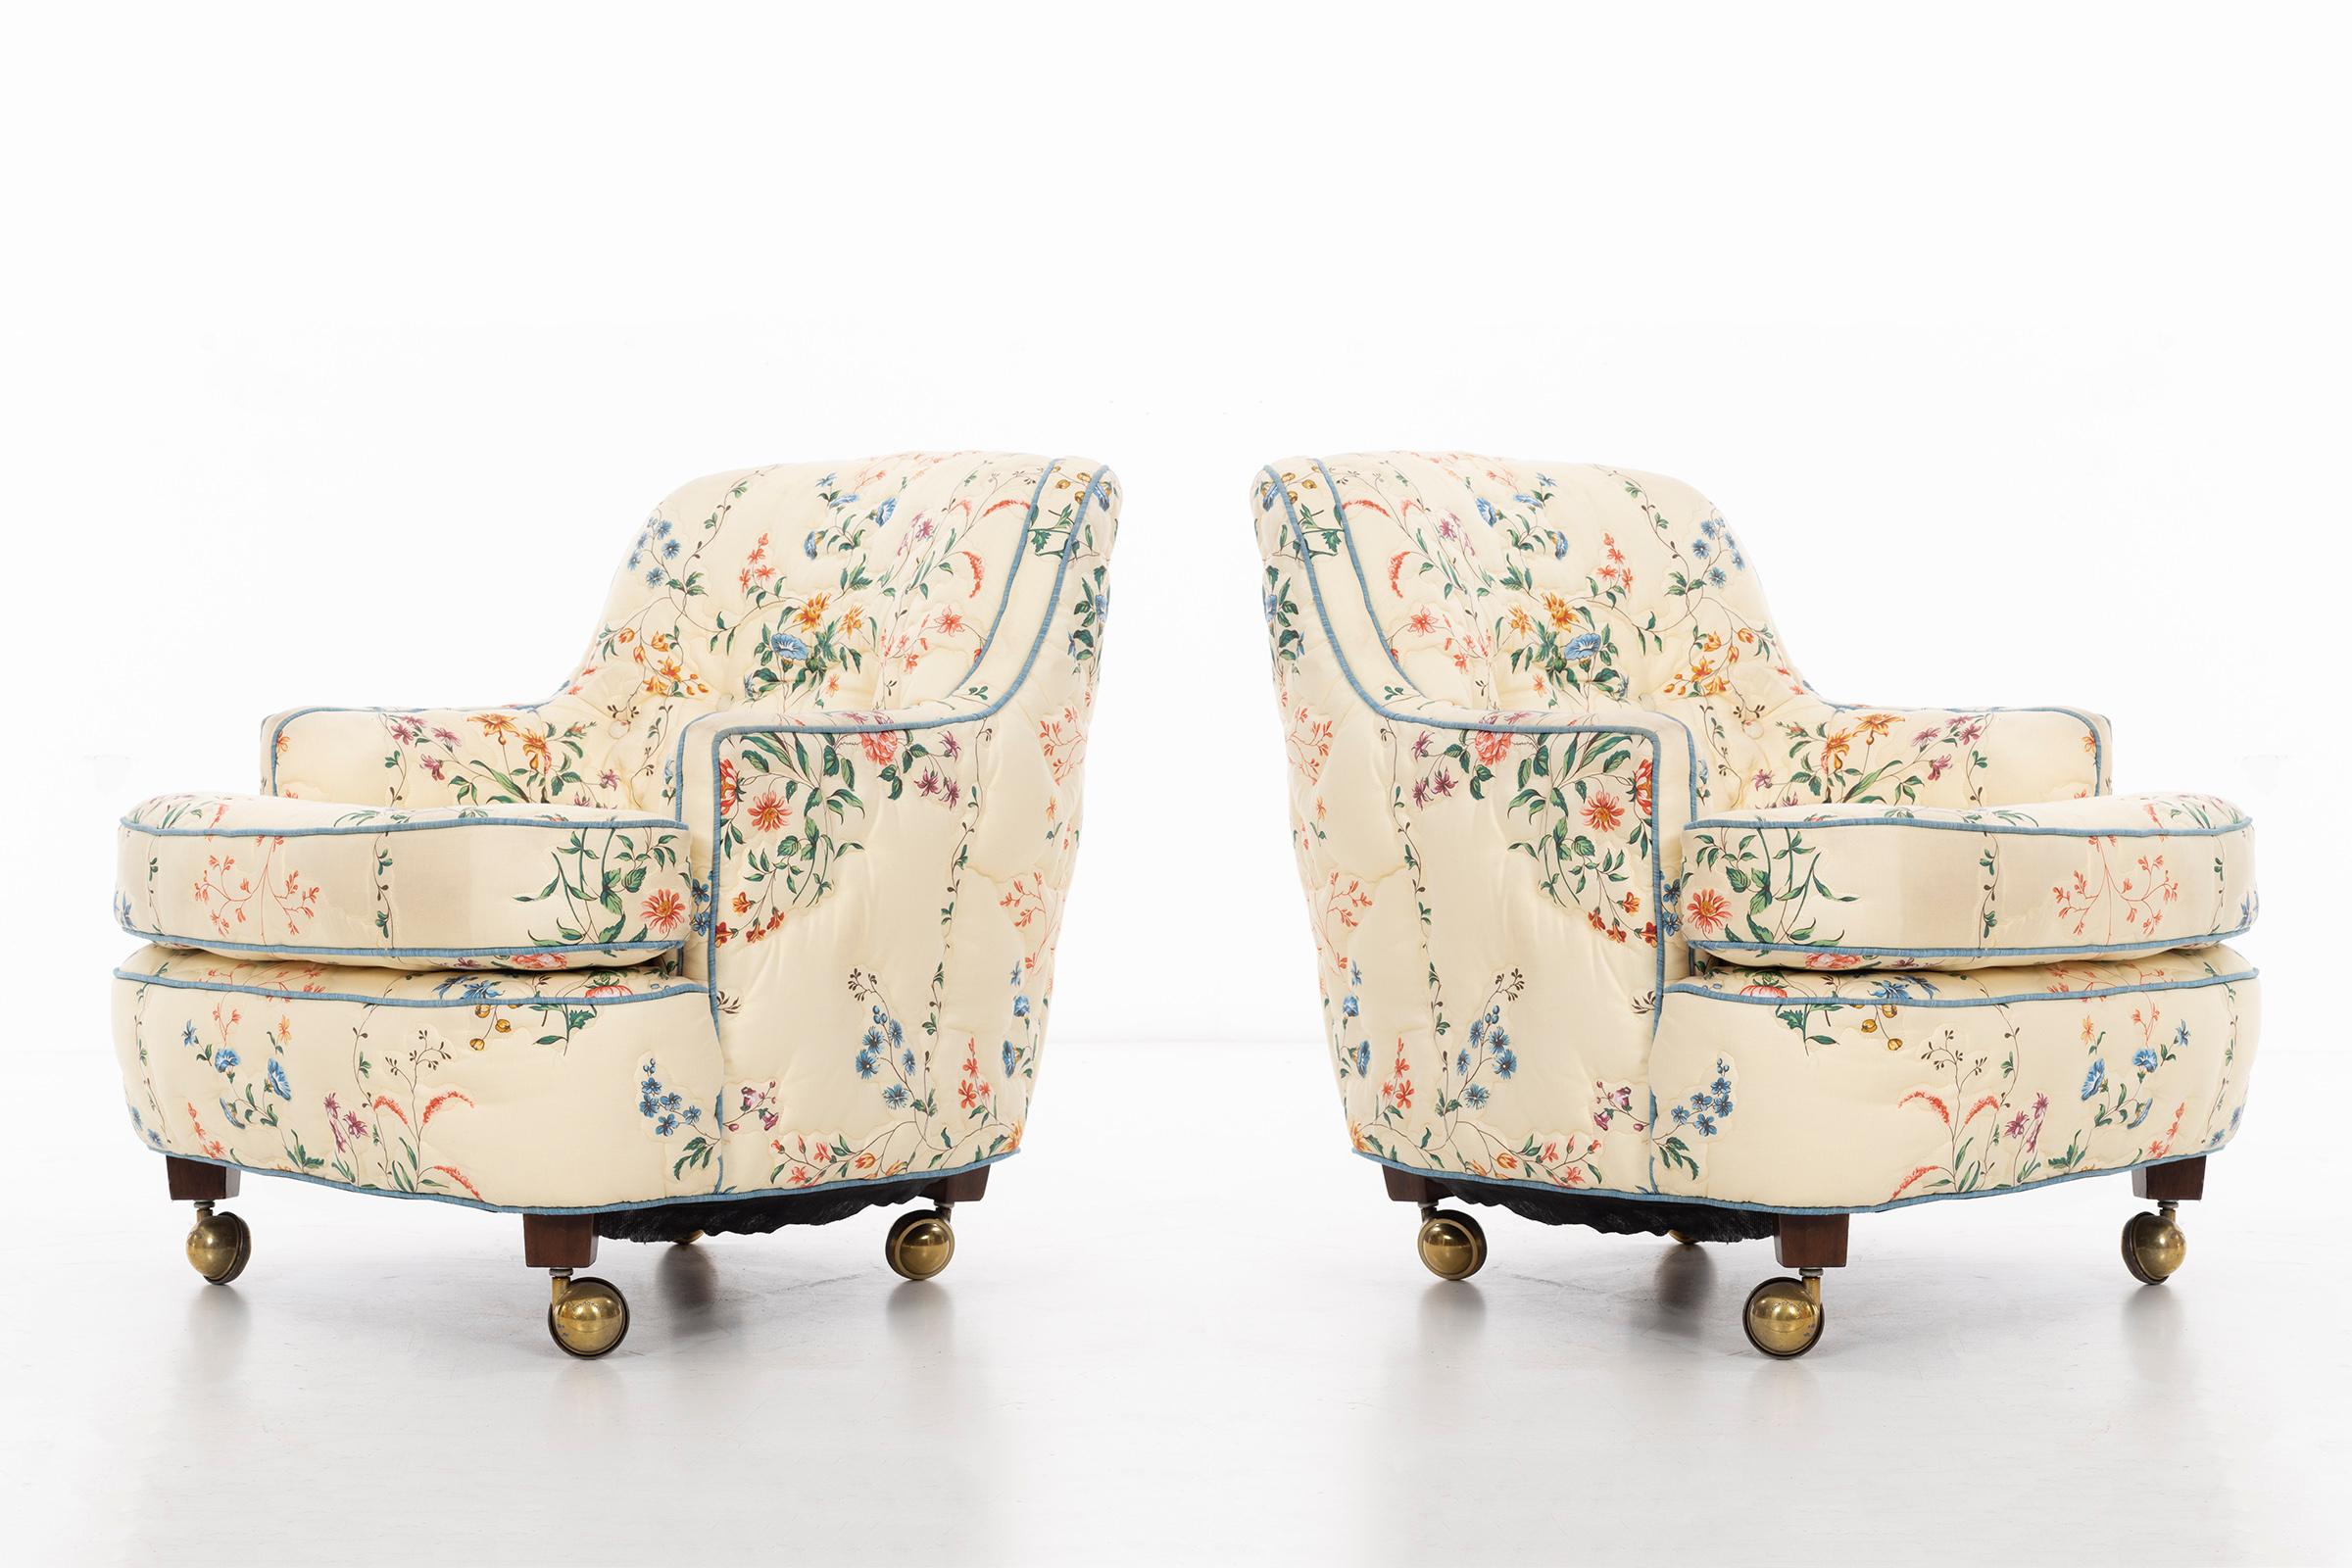 Mid-Century Modern Edward Wormley Lounge Chairs